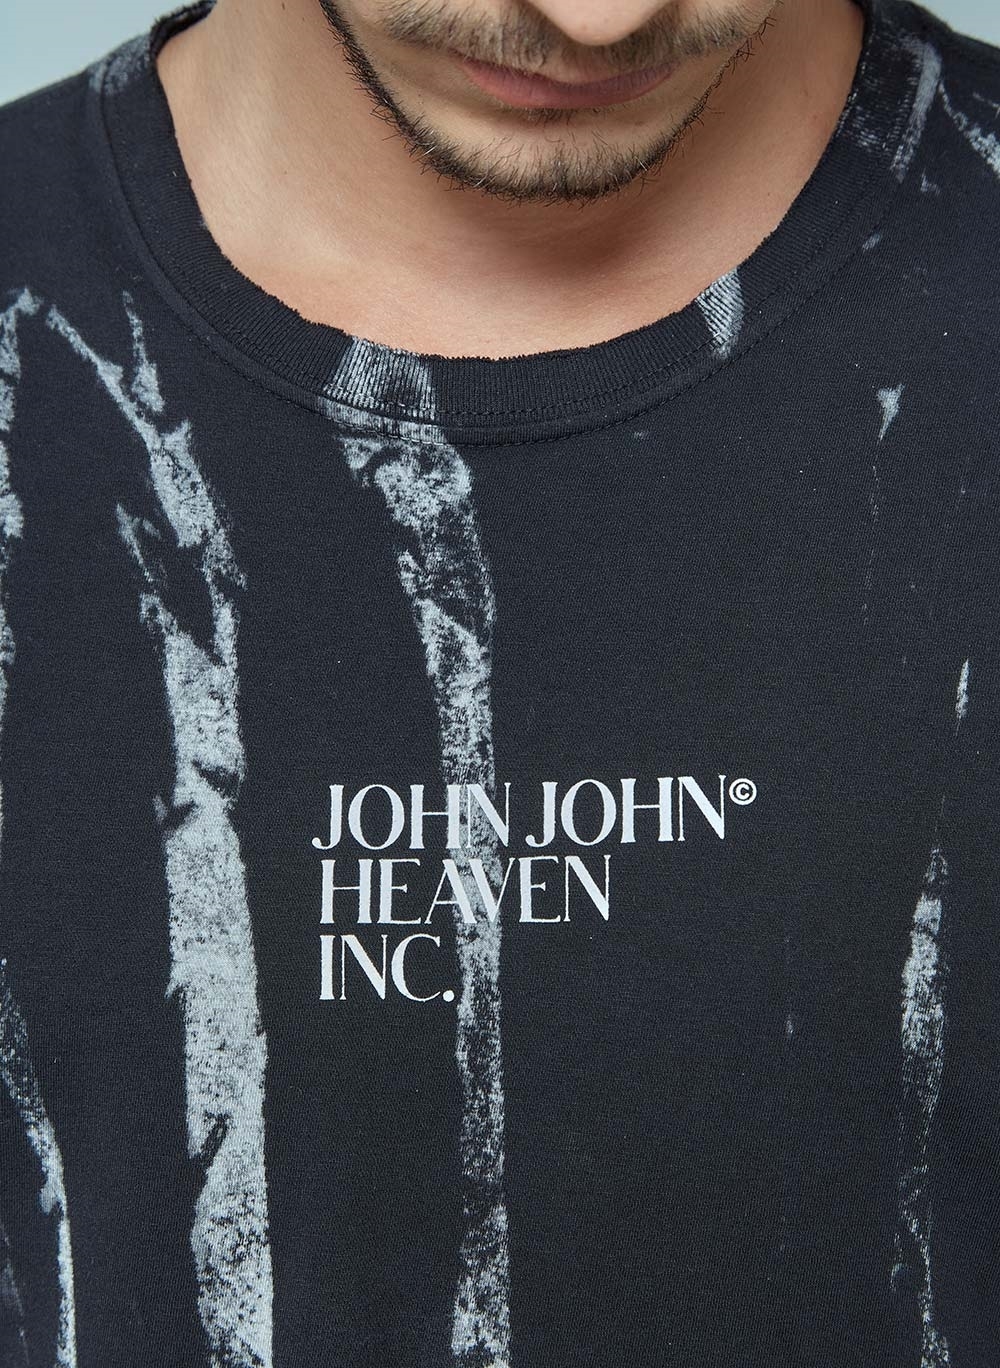 Camiseta John John com estampa de cocar de índo